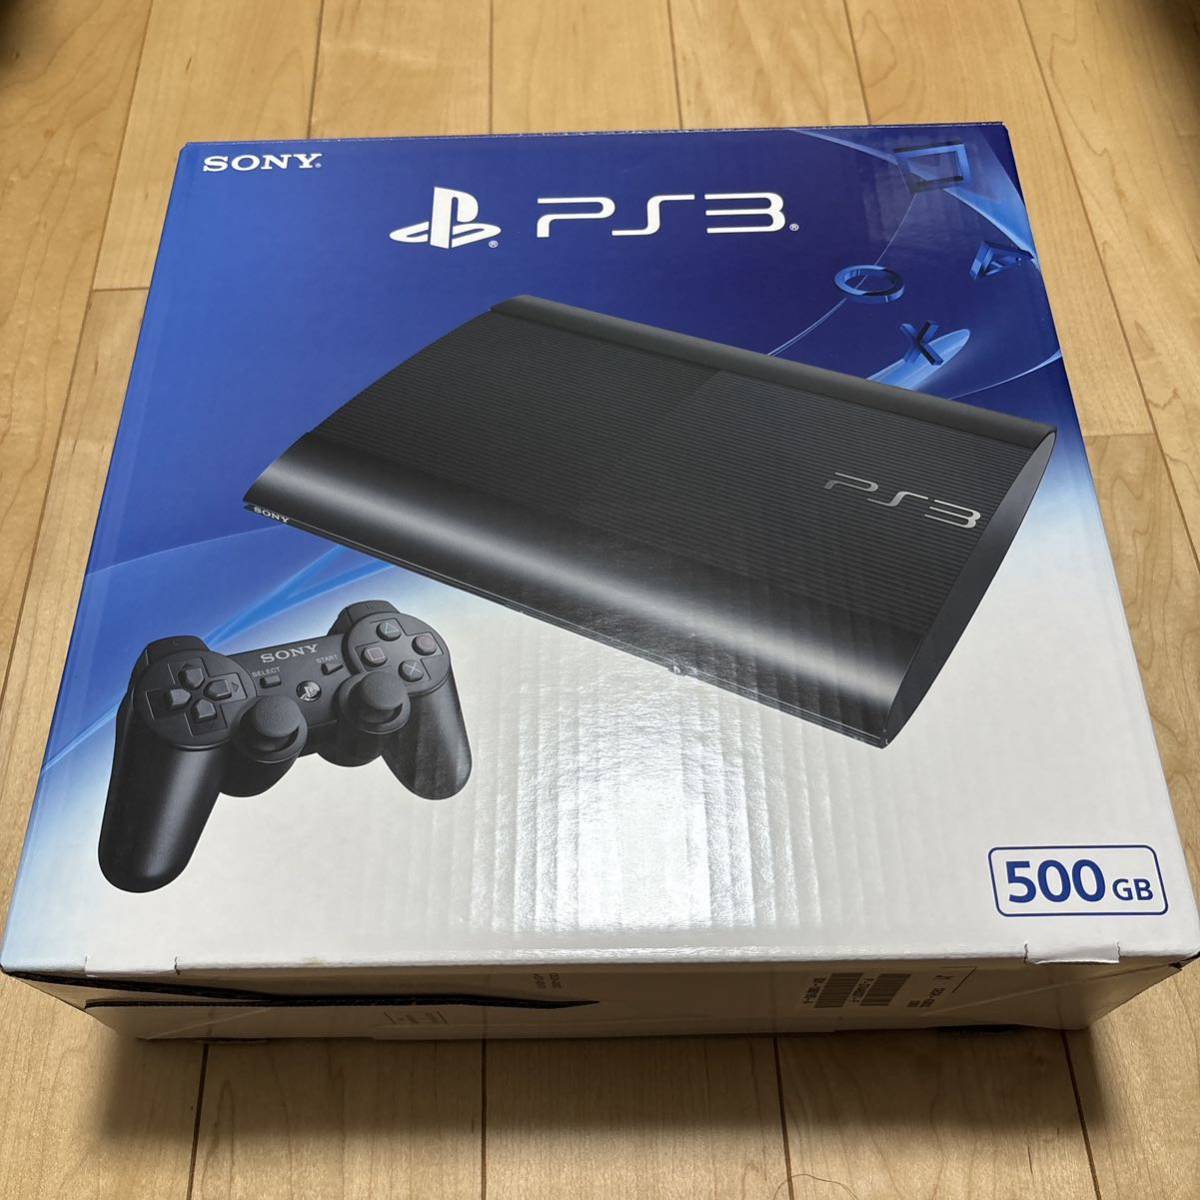 PlayStation 3 cech-4300c 500GB チャコール ブラック SONY ソニー